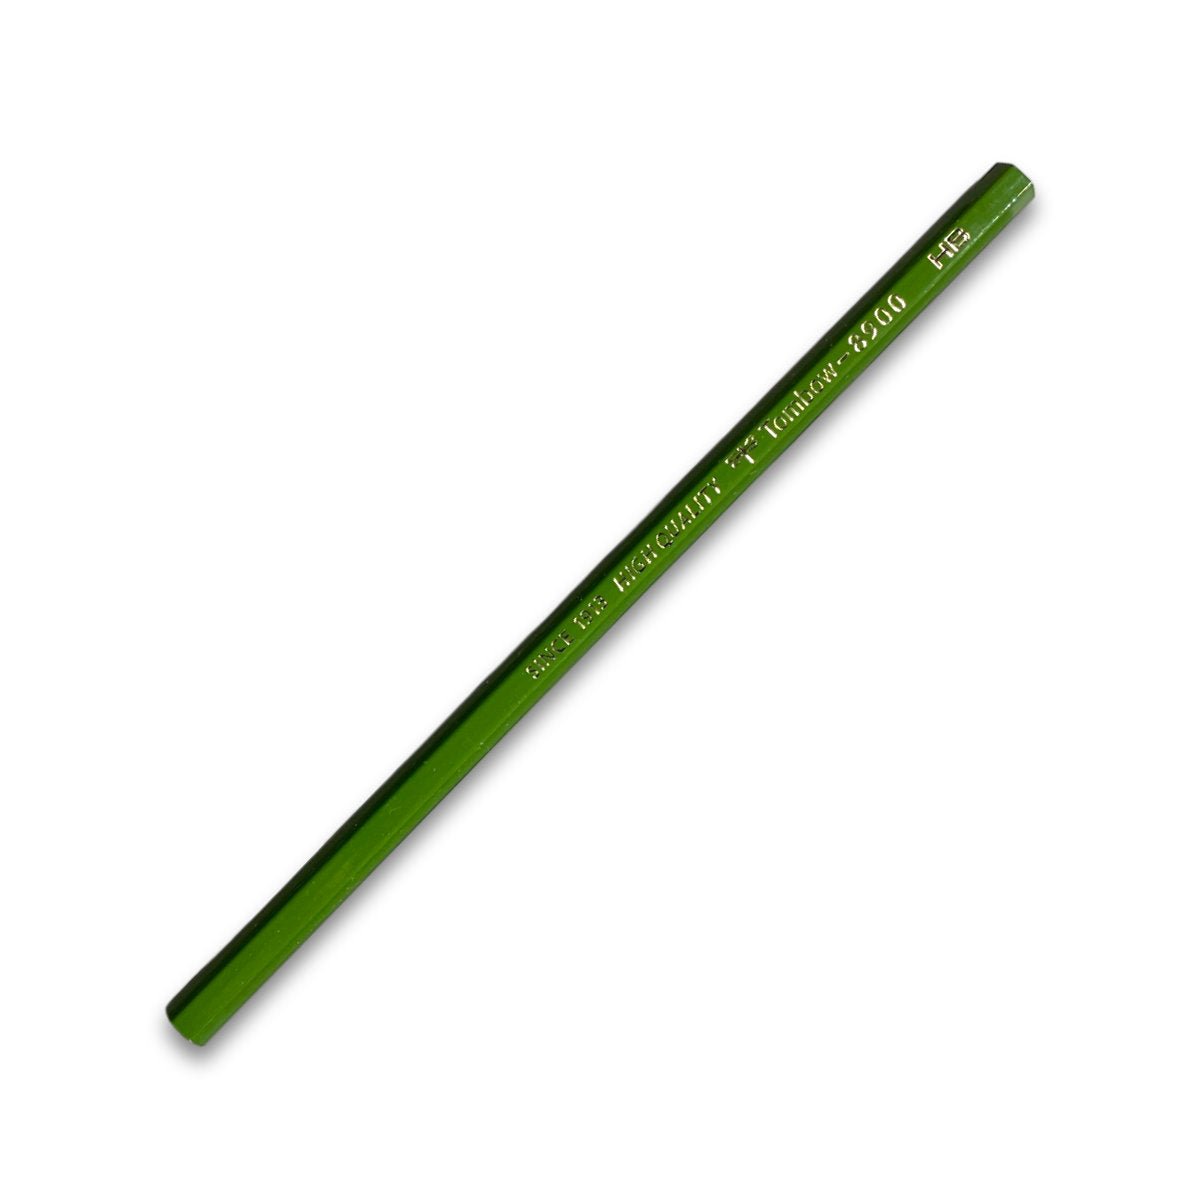 Tombow 8900 Single Pencil - HB - Notegeist